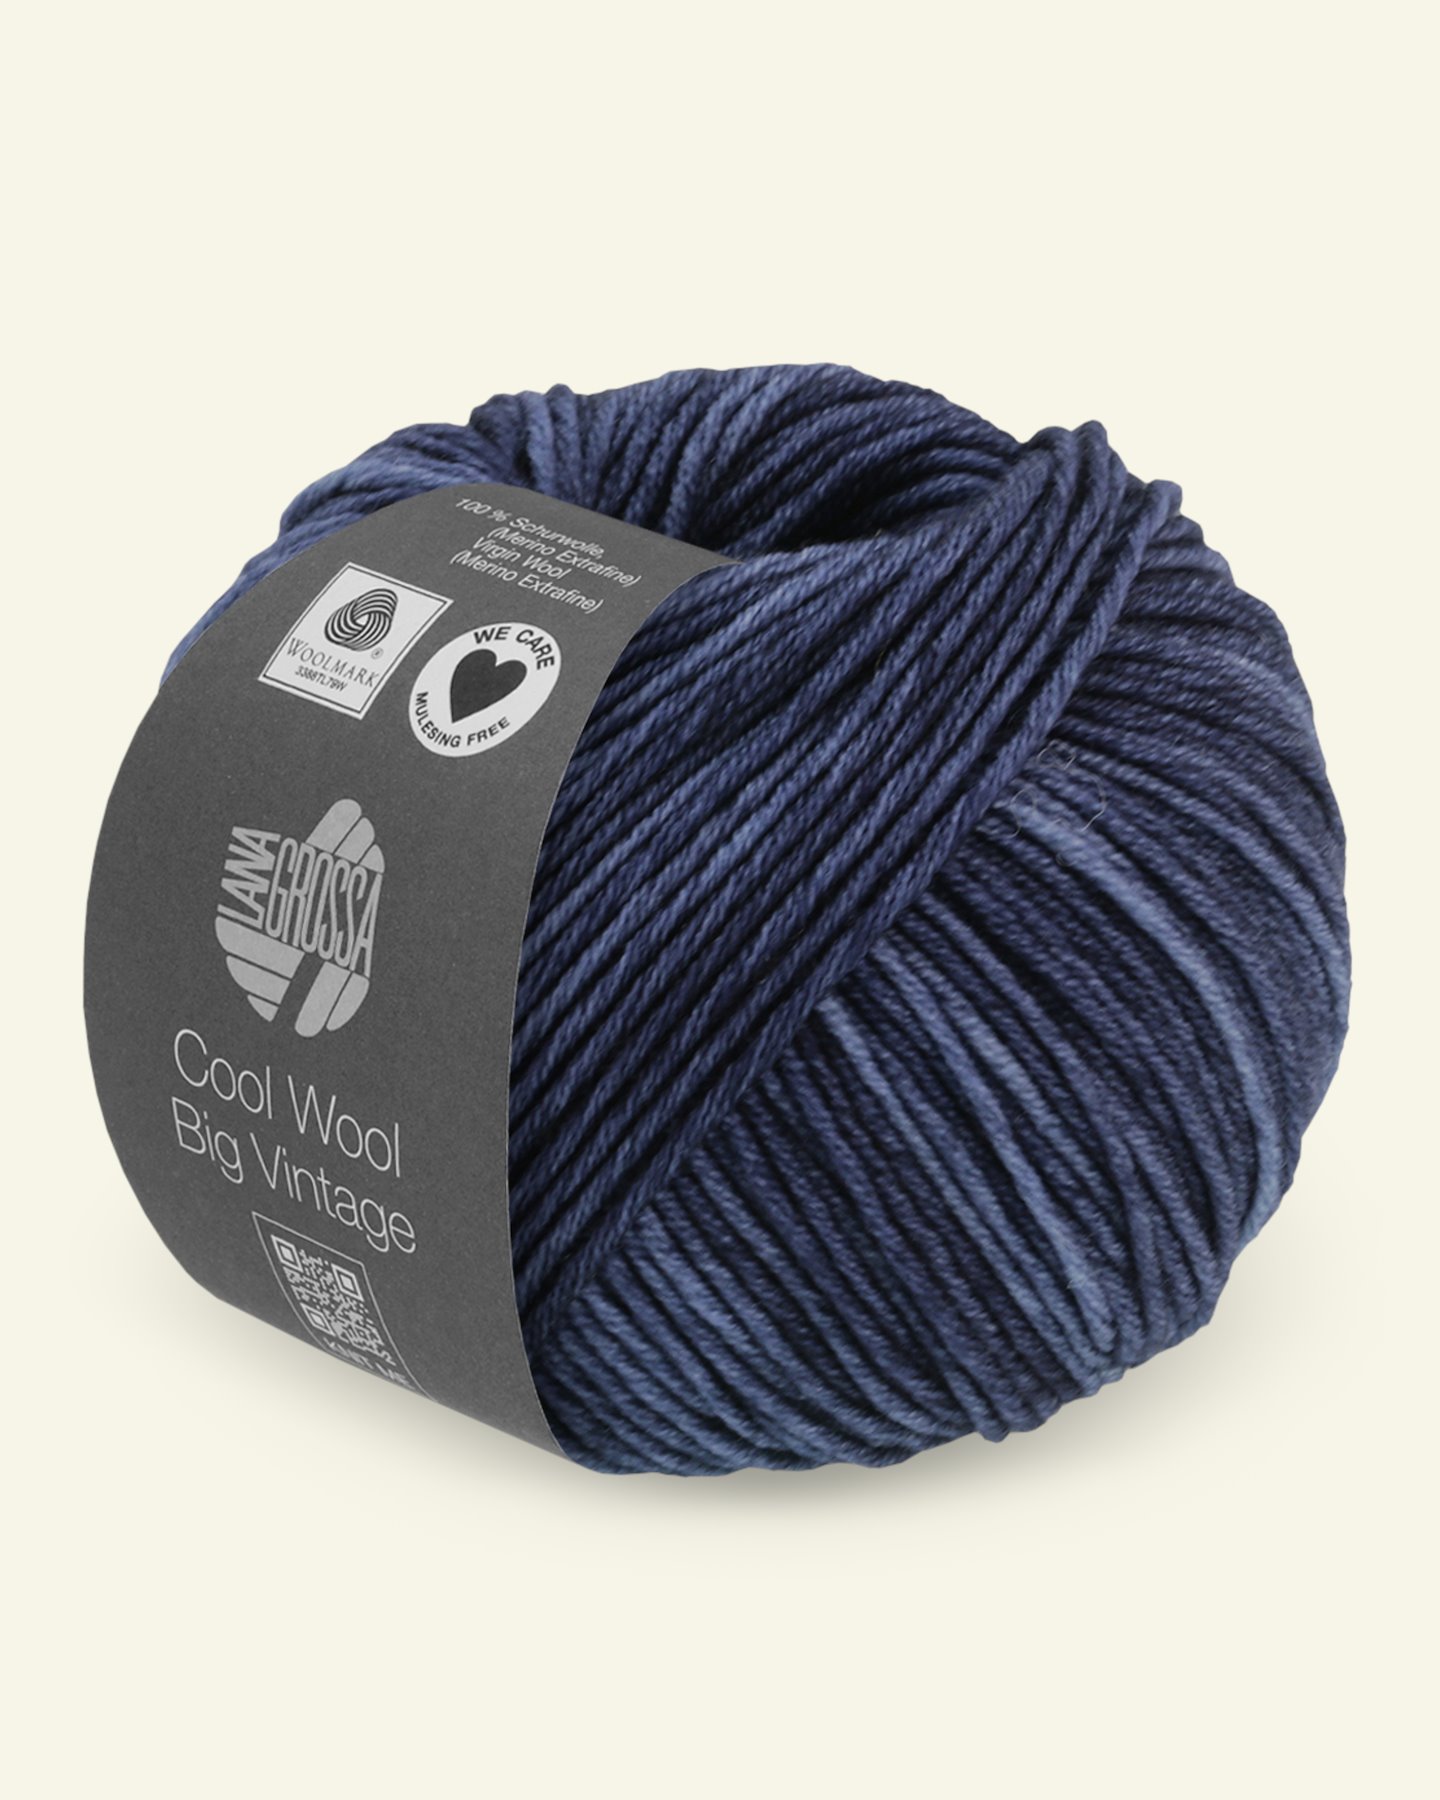 Lana Grossa, extrafine merino wool yarn "Cool Wool Big Vintage", dk blue 90001070_pack